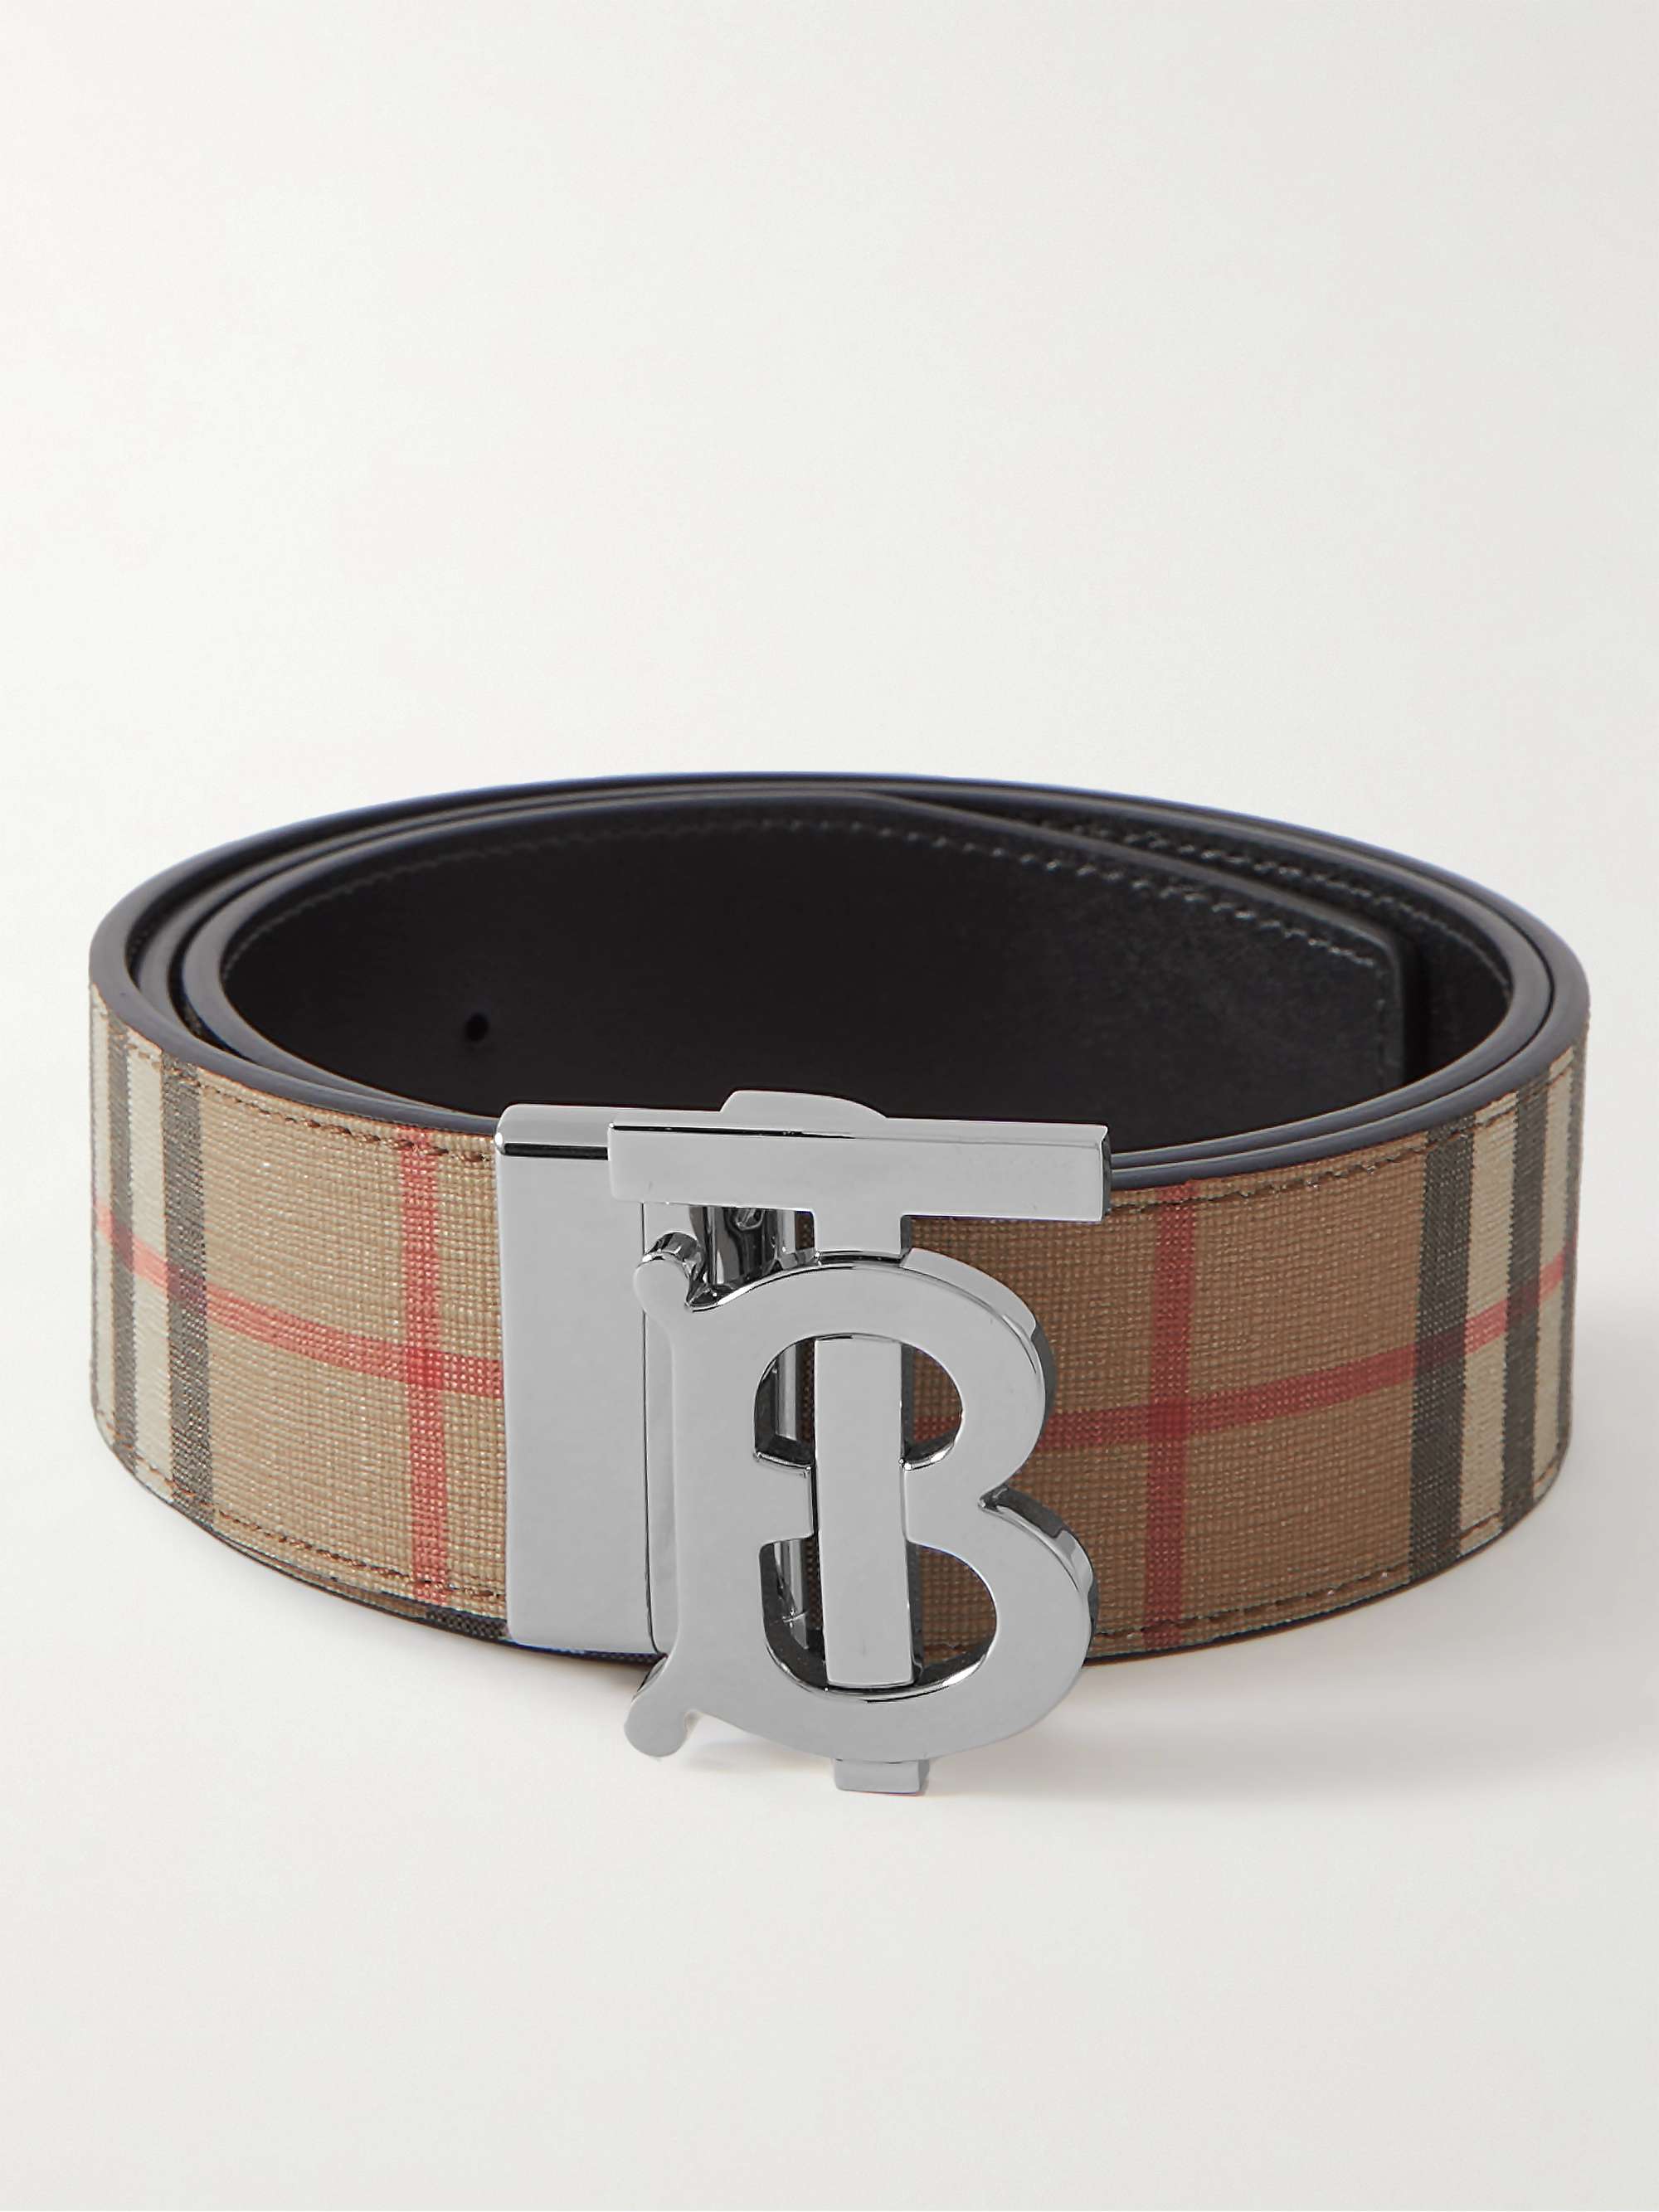 Mens Burberry Belts, Leather Belts